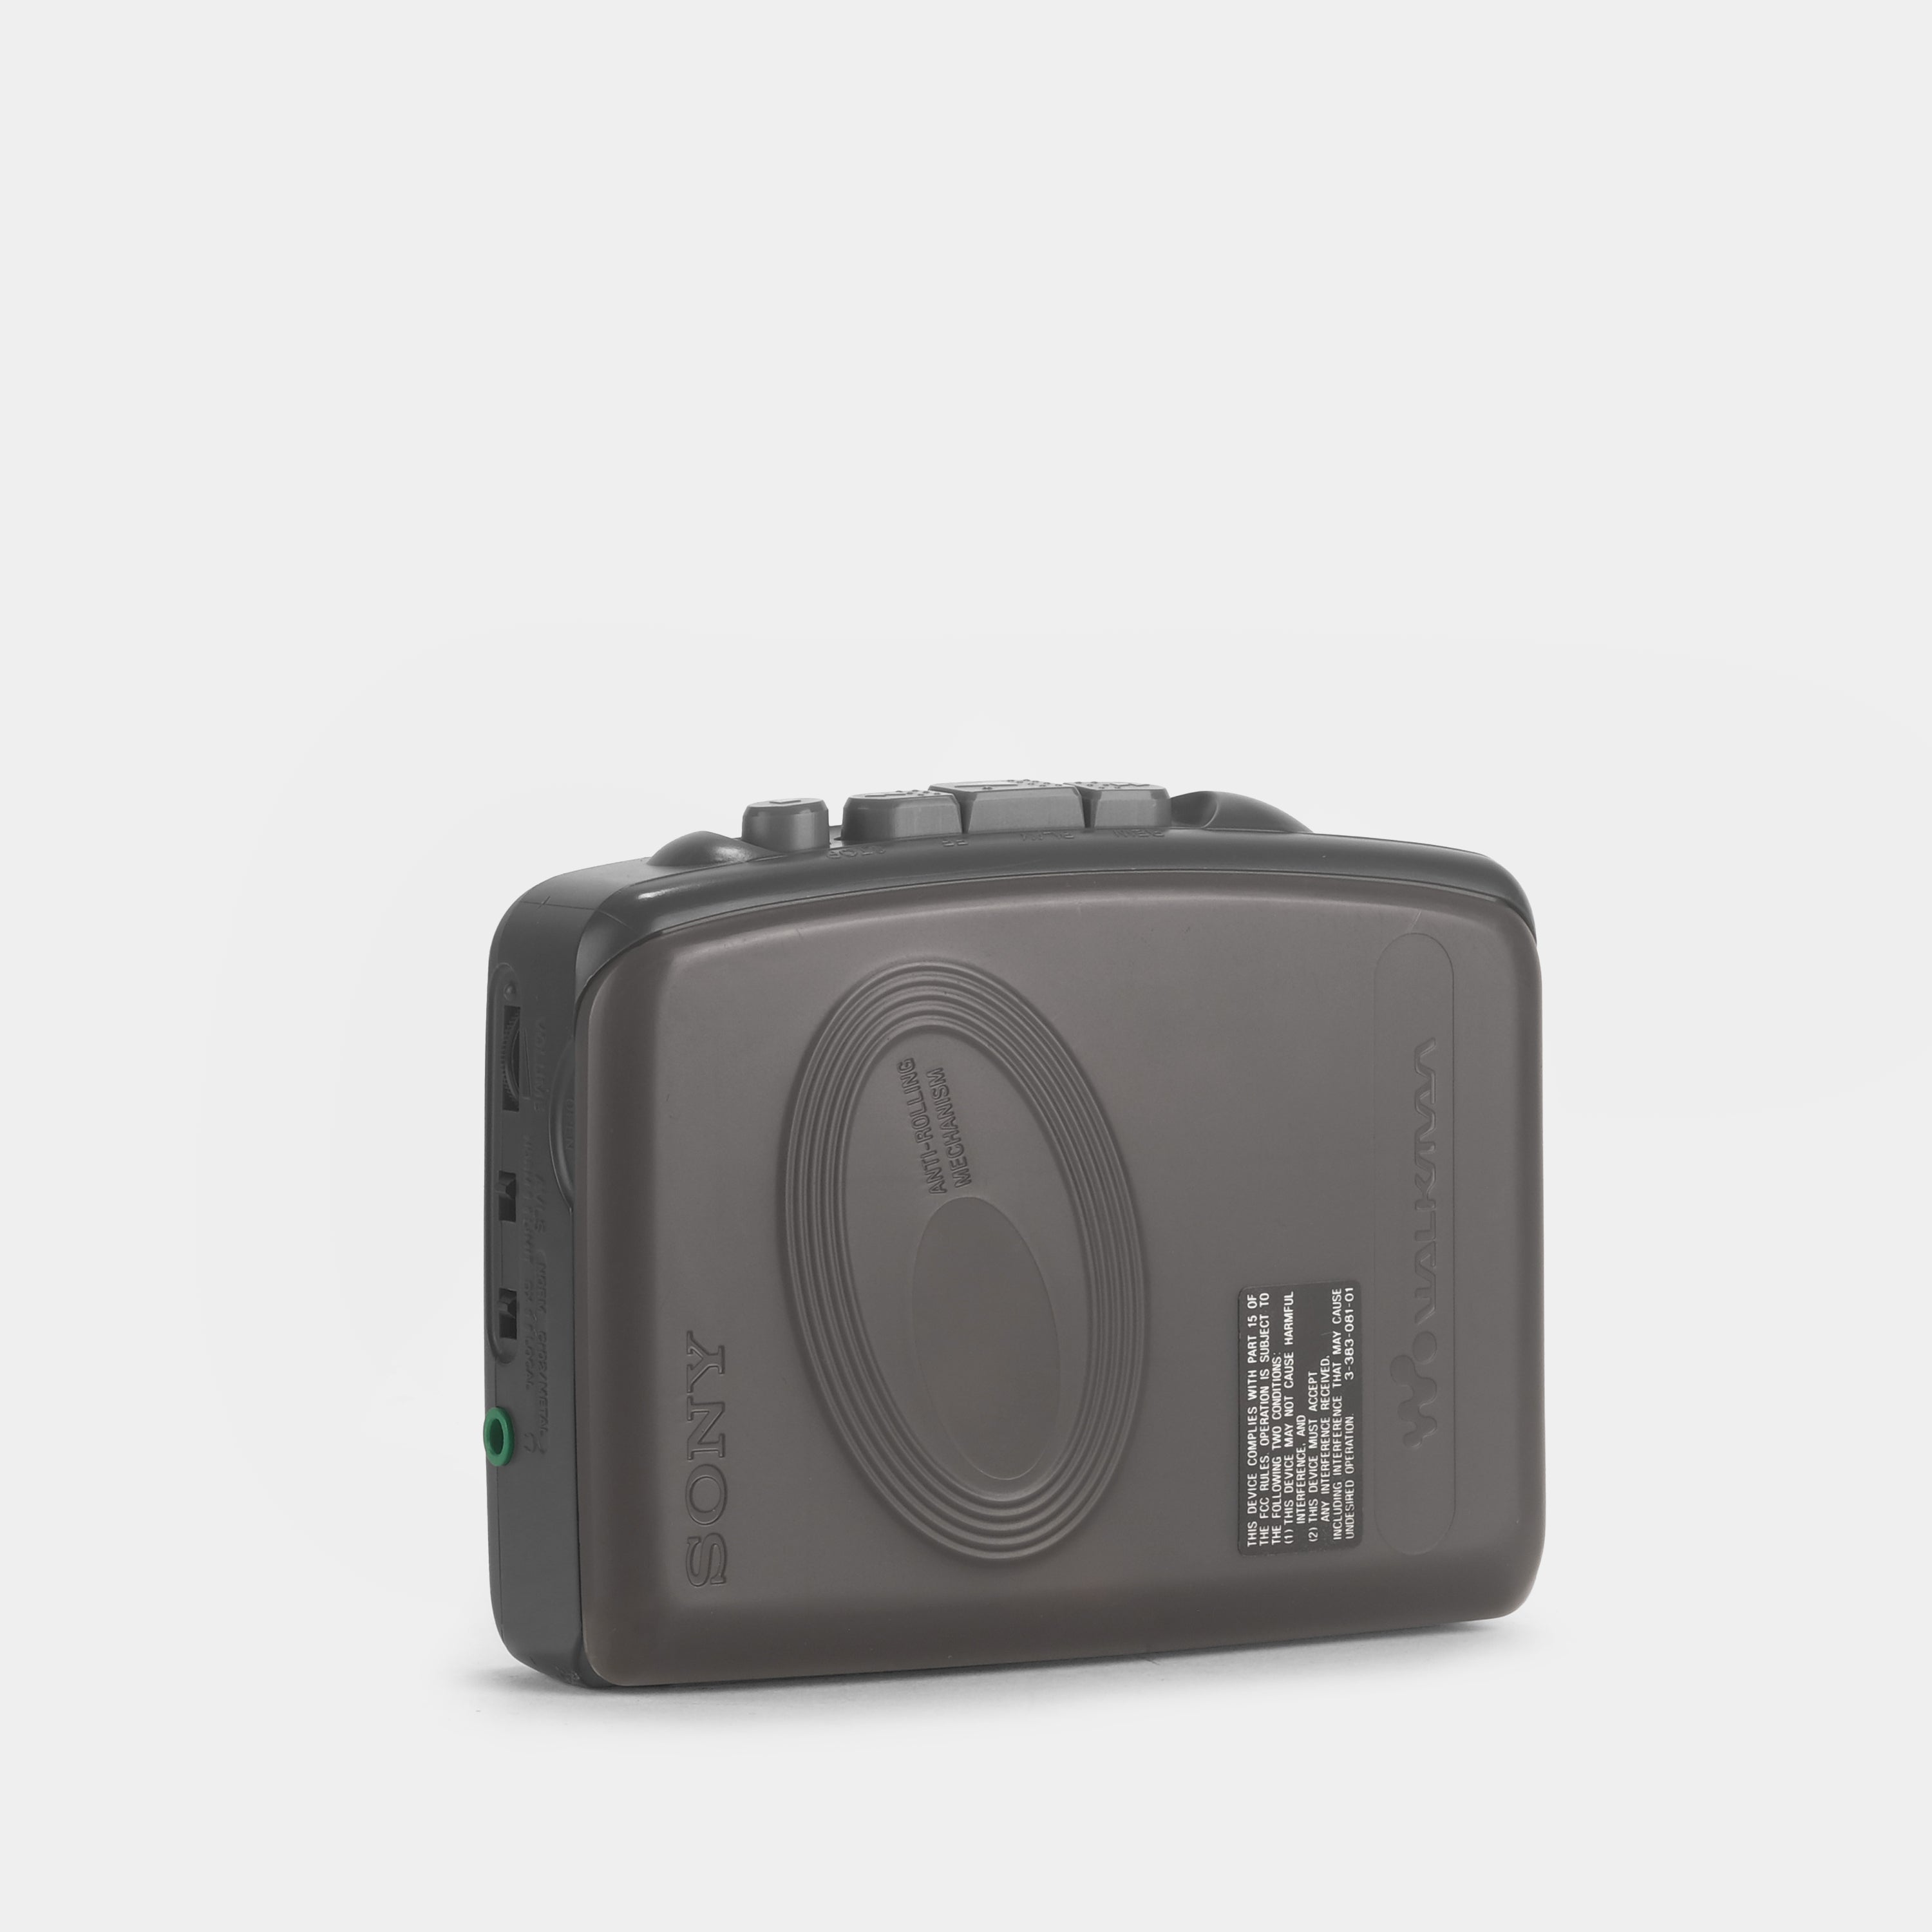 Sony Walkman WM-FX241 Portable Cassette Player